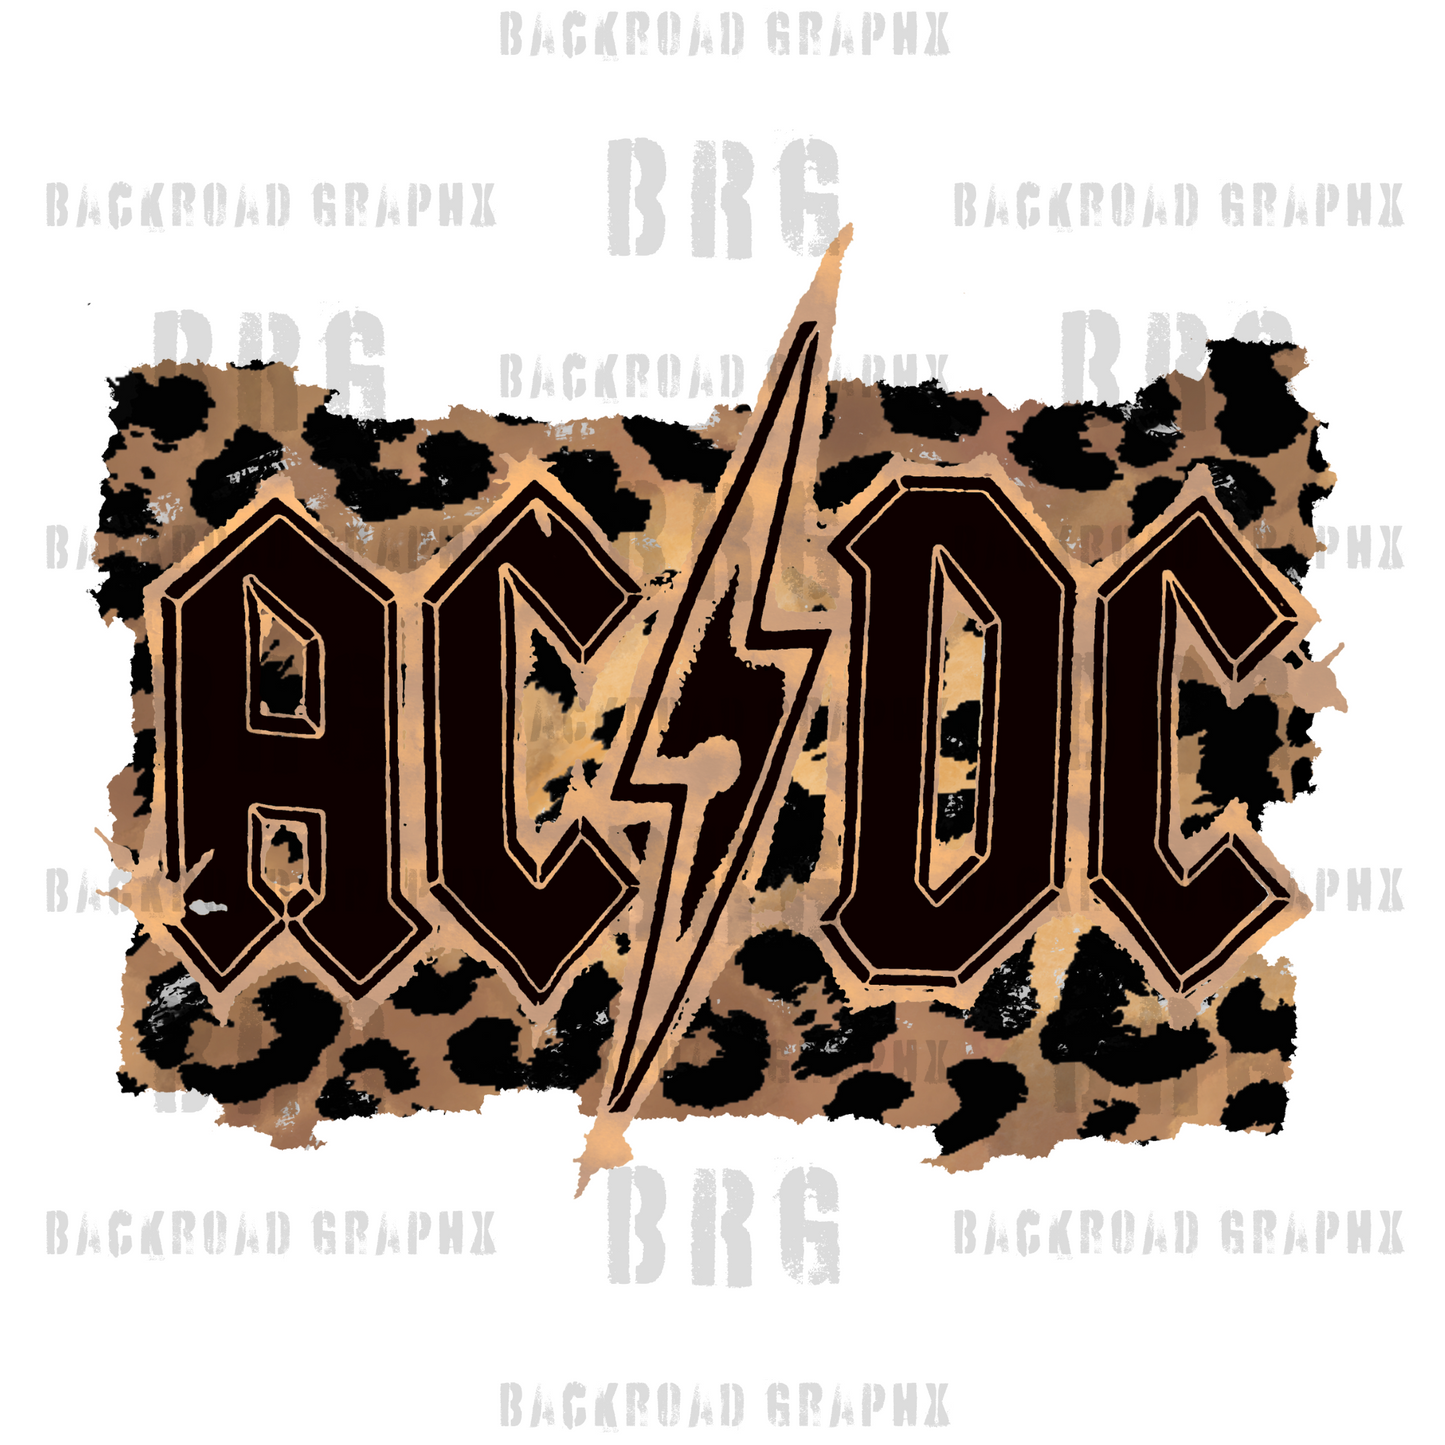 AC/DC transfer